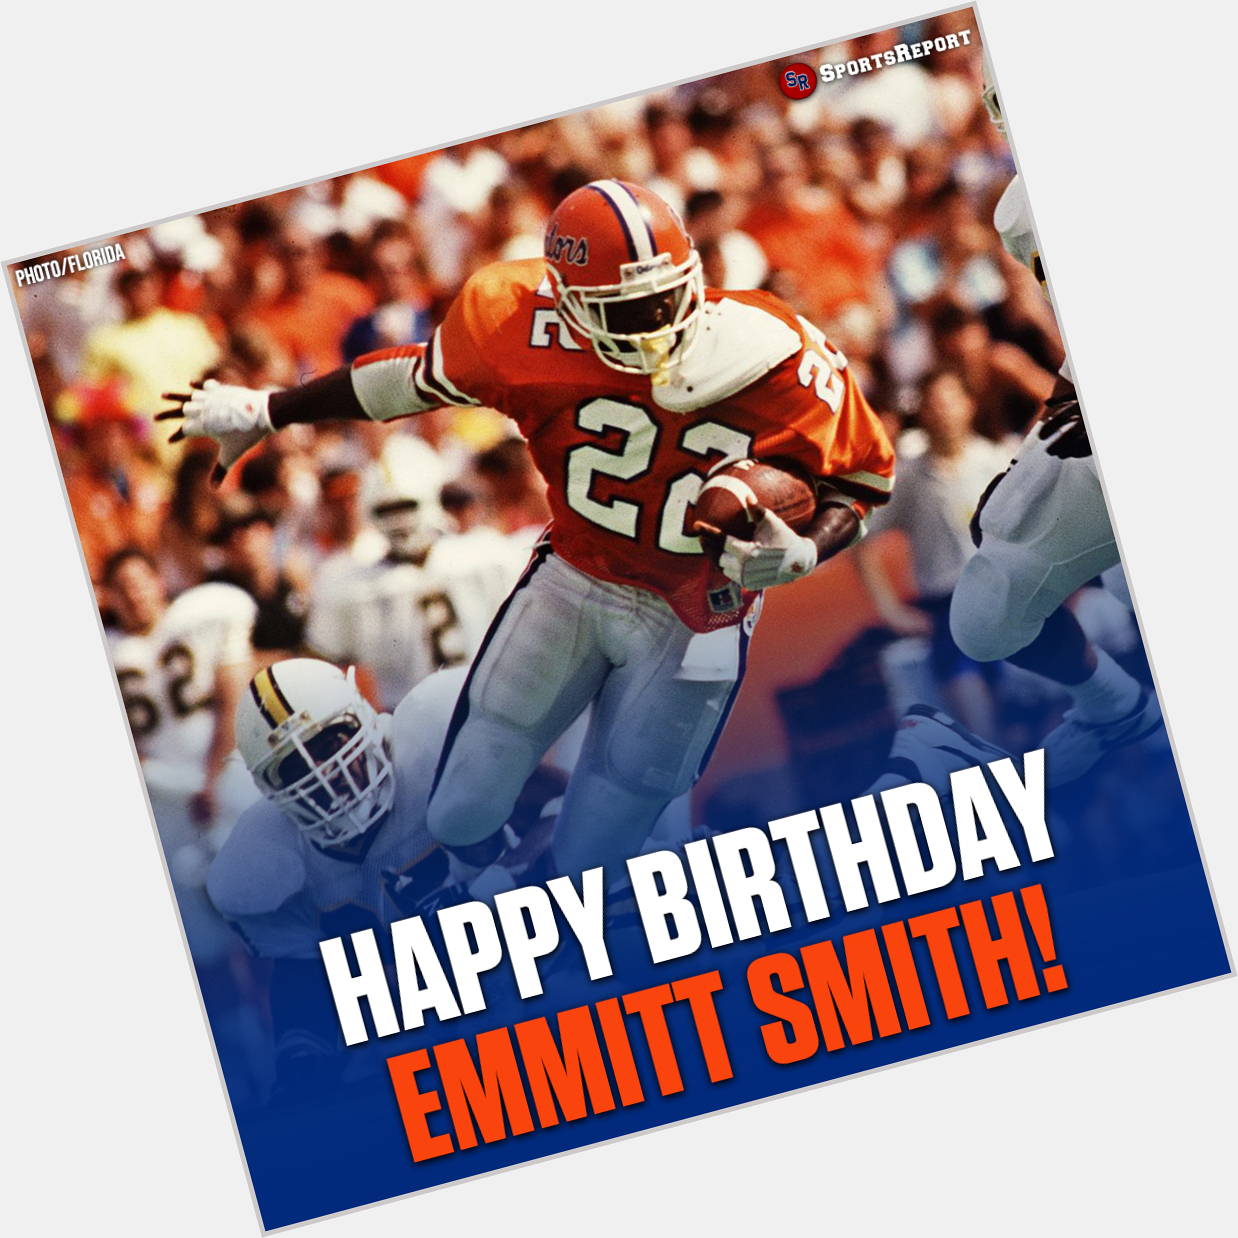  Fans, let\s wish LEGEND Emmitt Smith a Happy Birthday!! 